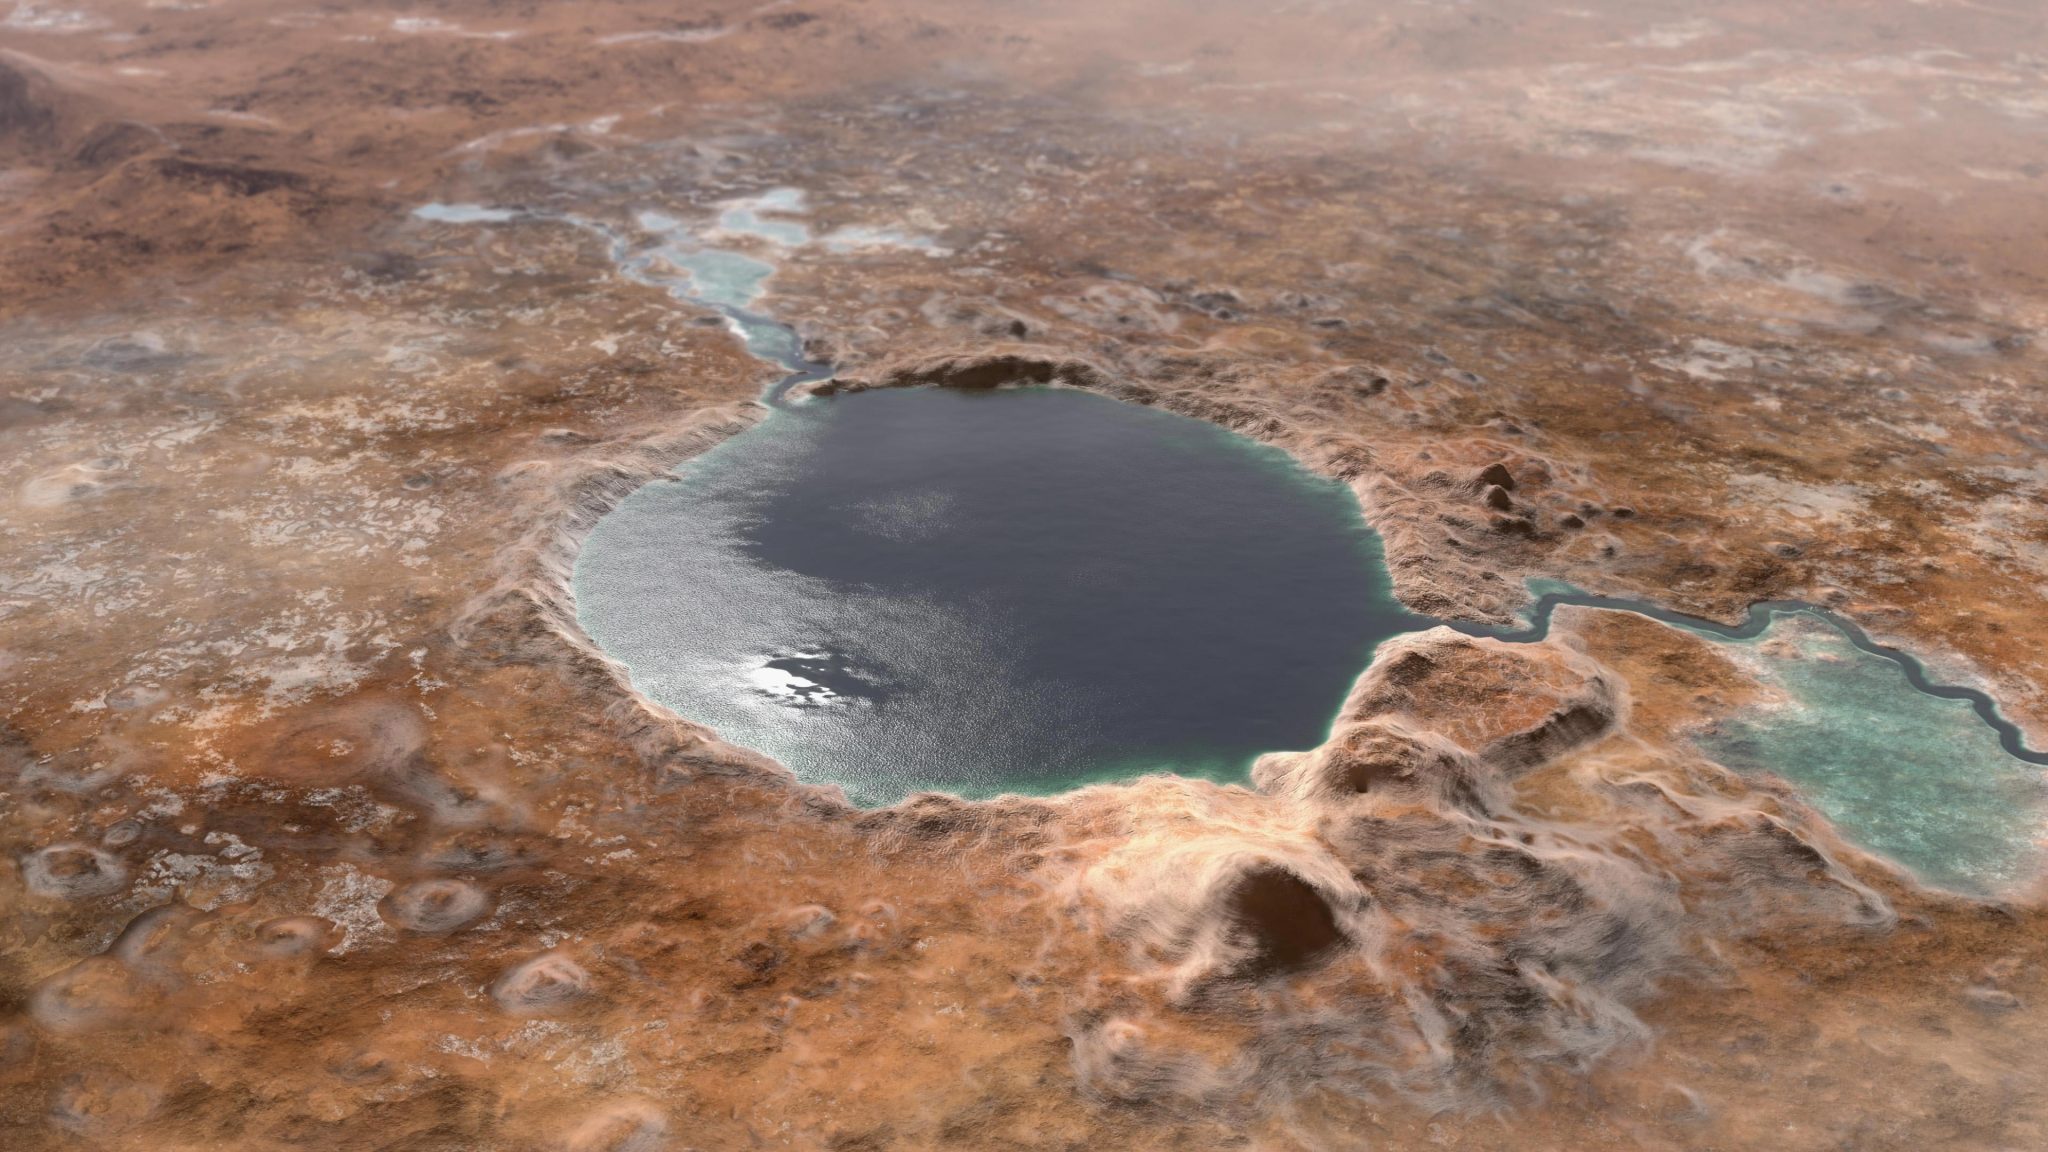 mars-jezero-crater-lake-2048×1152-1